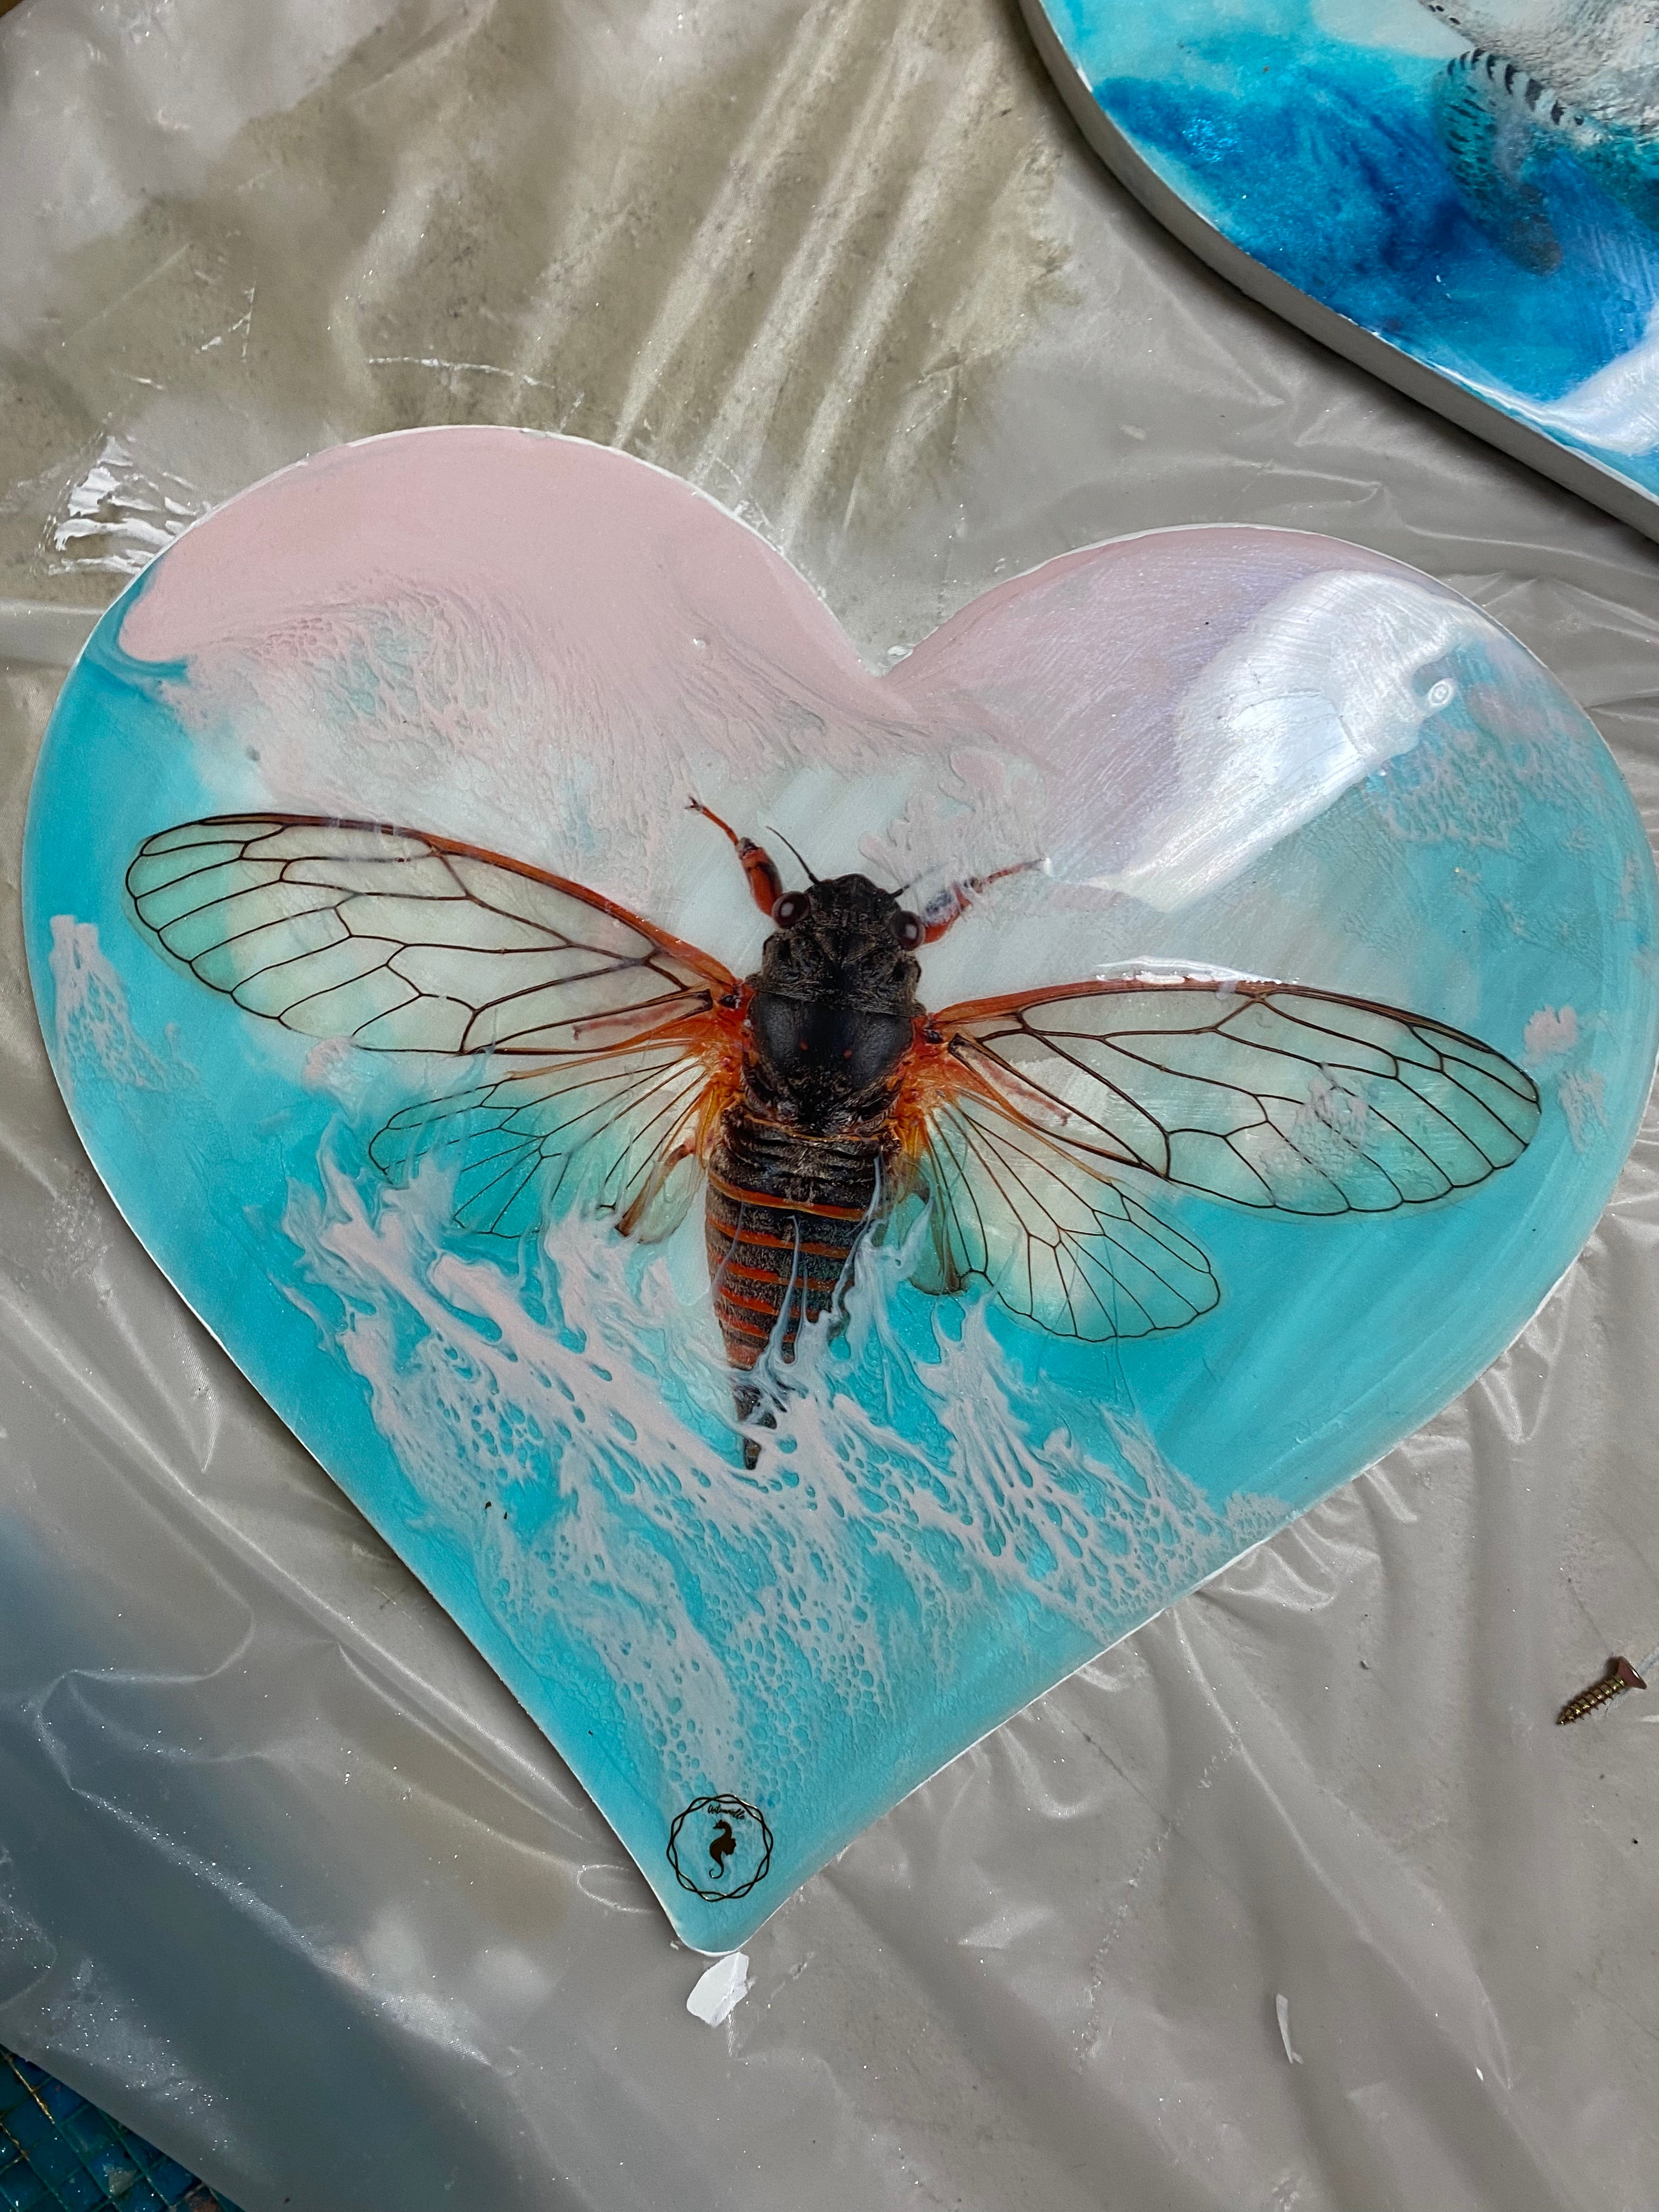 Romantic Cicada - Rebirth - New Love - Xmas gift to find new Love